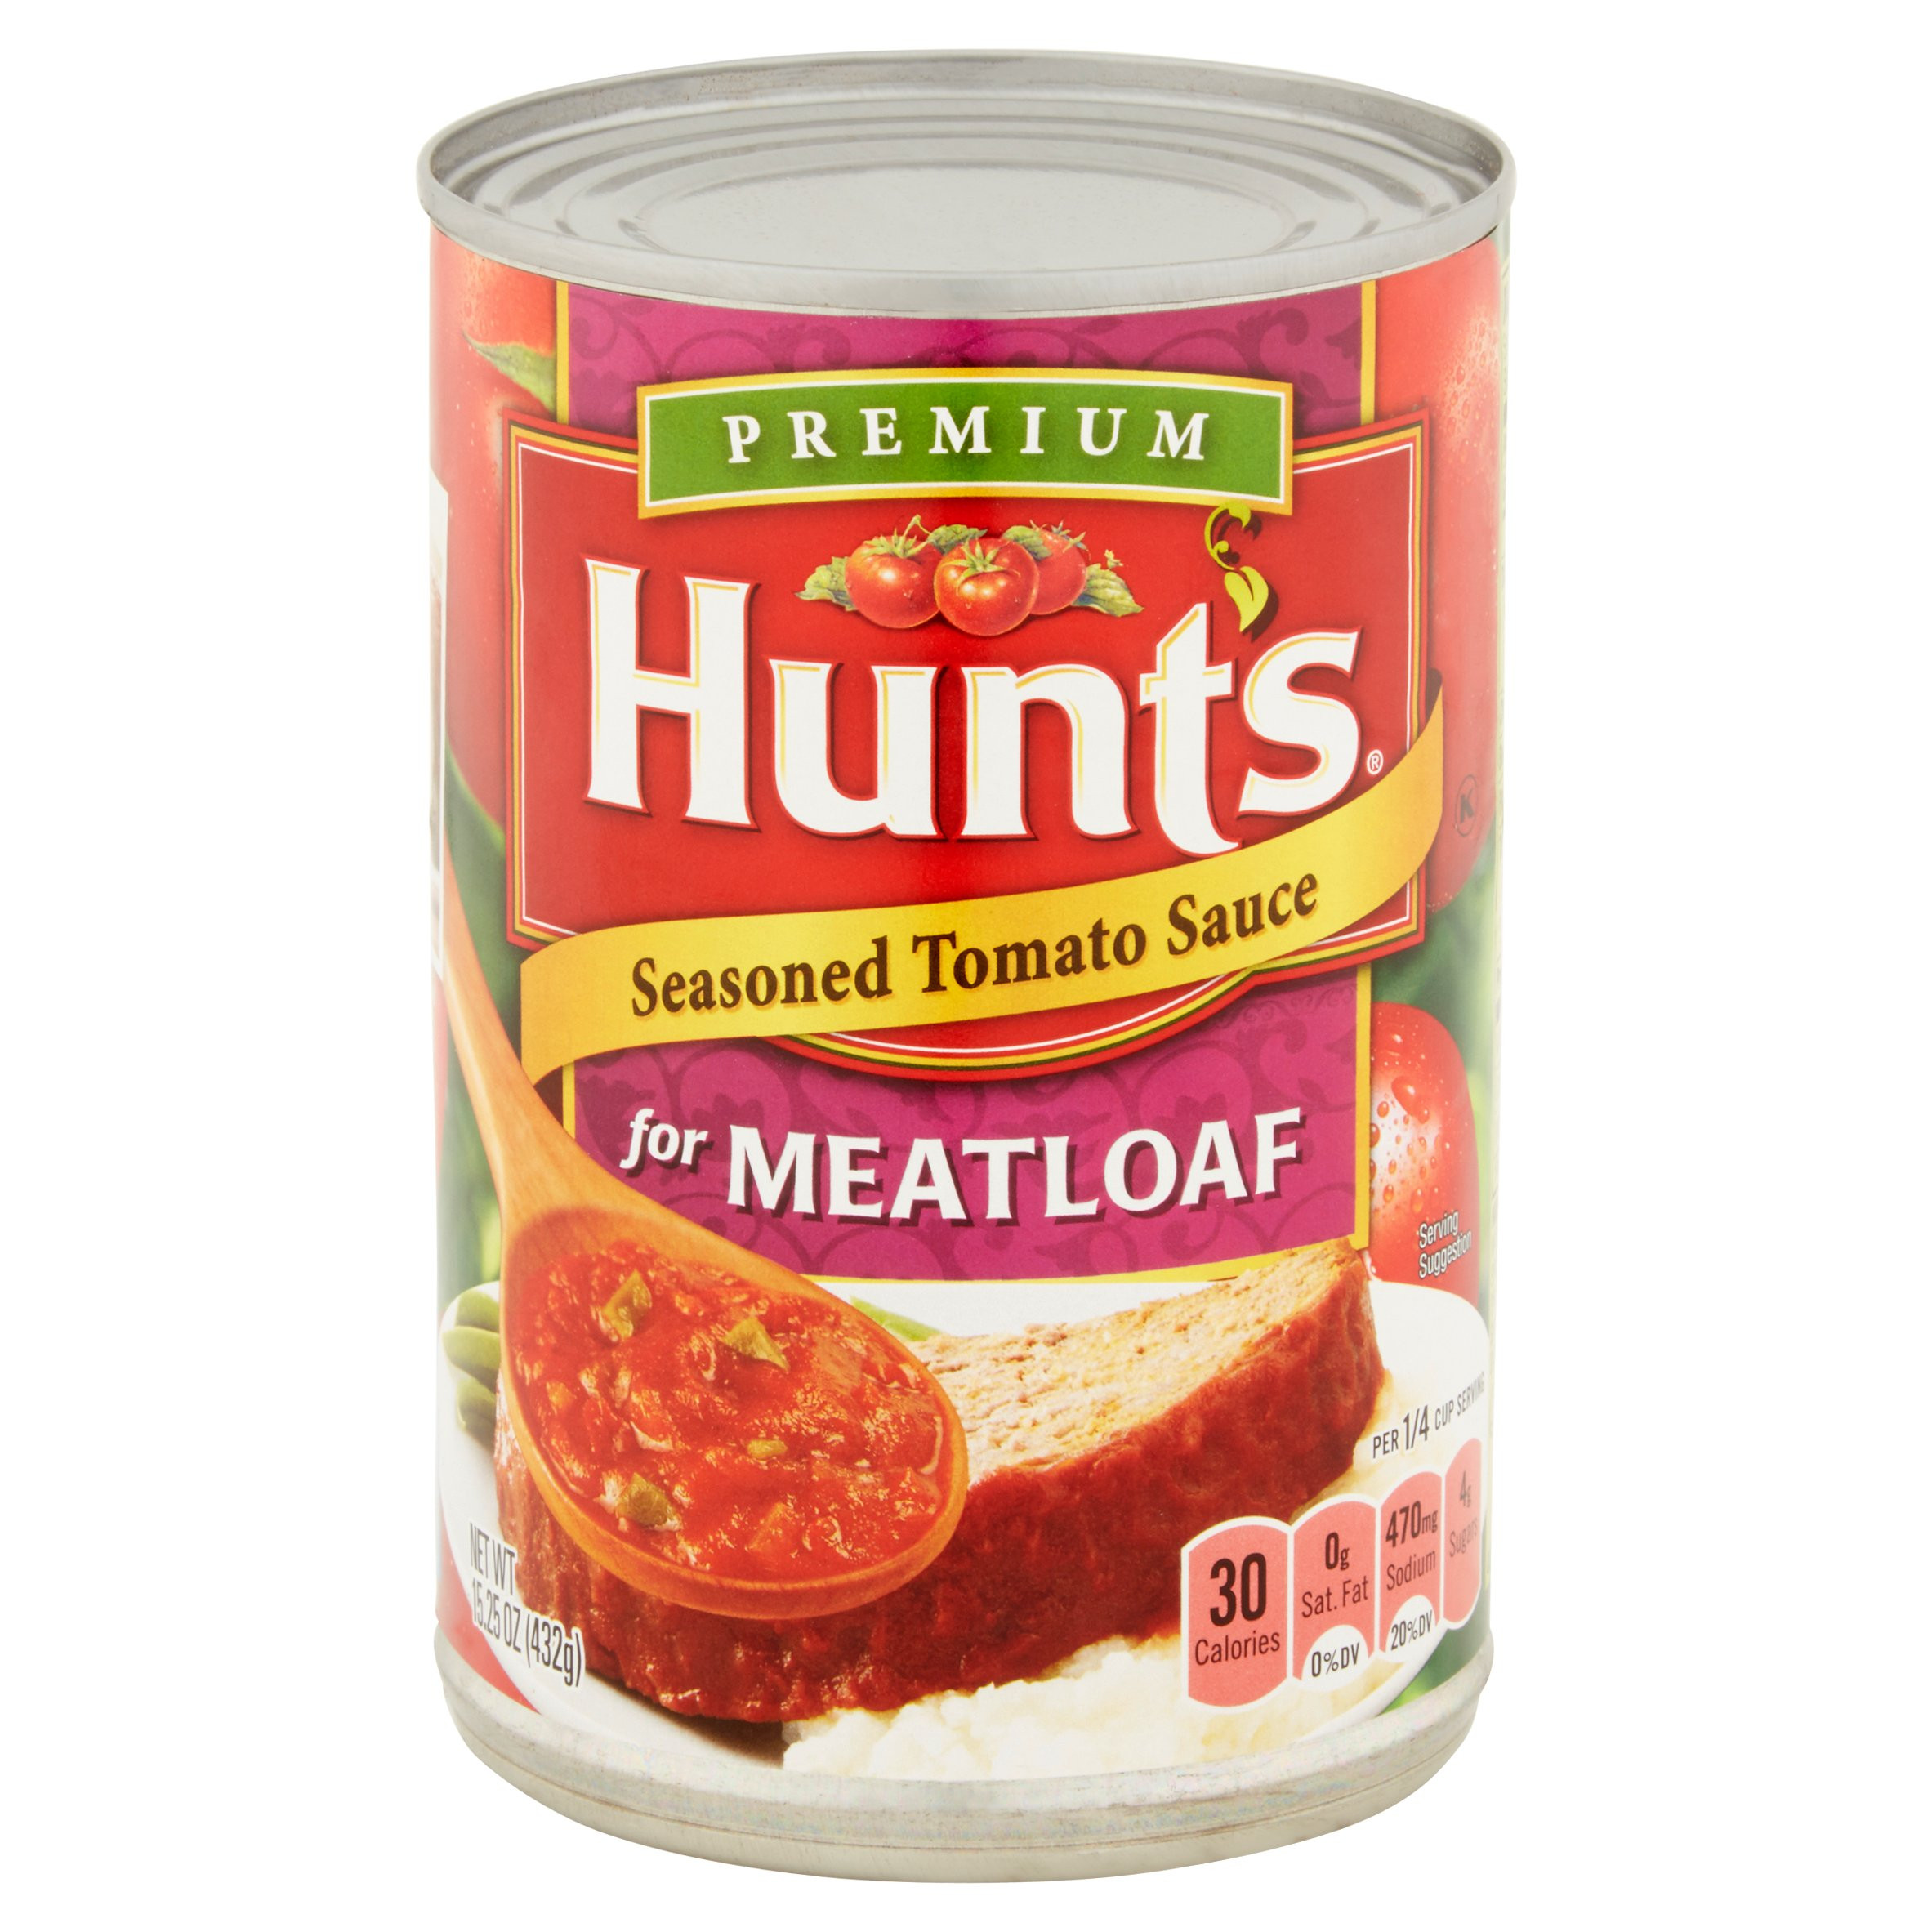 Sauce For Meatloaf
 Hunts Seasoned Diced Tomatoes in Sauce for Meatloaf 15 oz